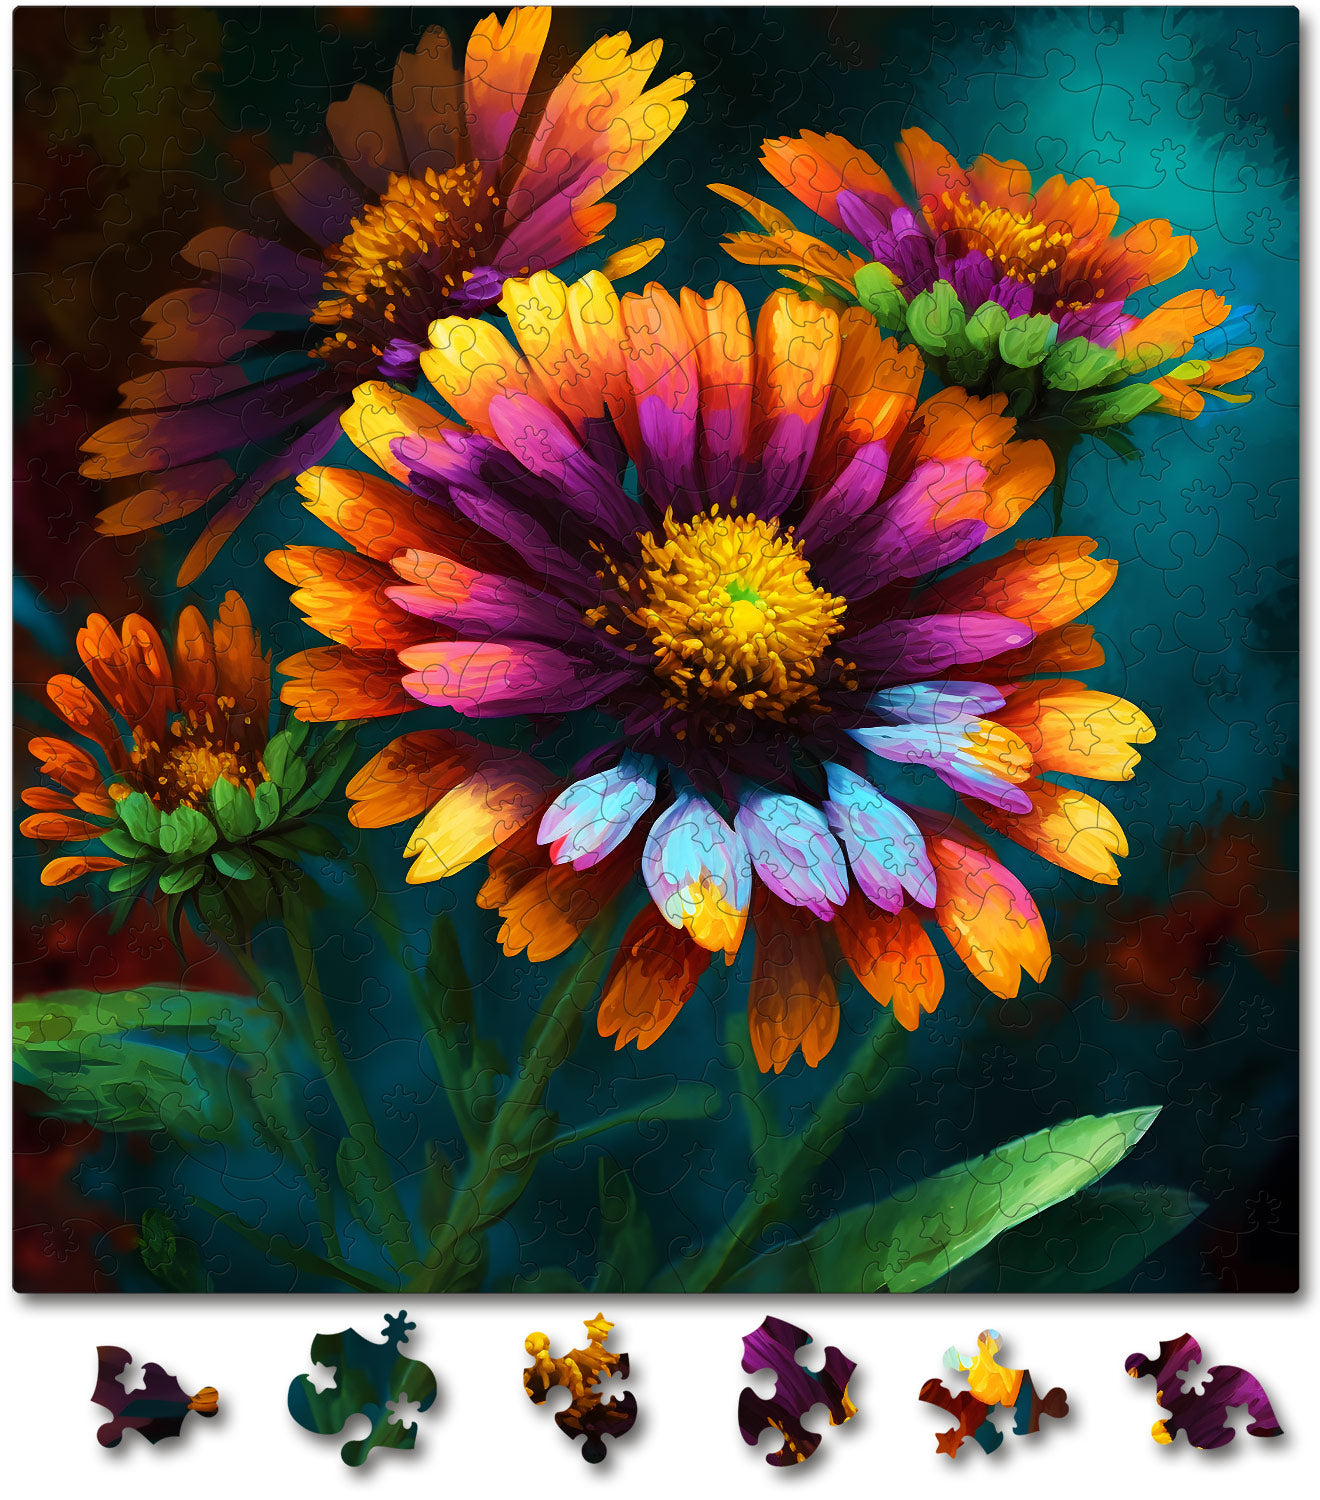 Puzzle cu Flori - Great Blanket Flower - 200 piese - 30 x 30 cm